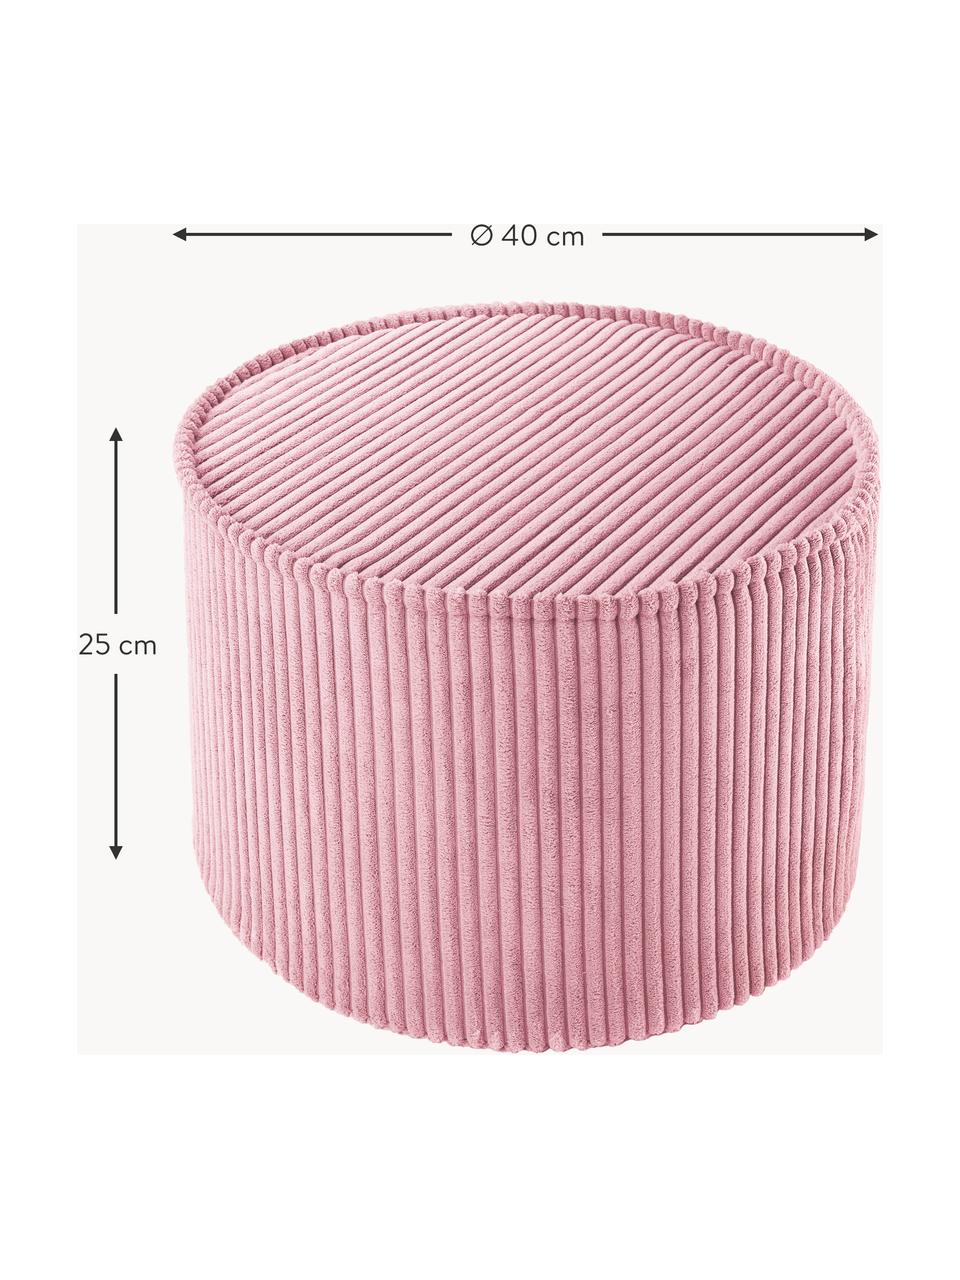 Kinder-Pouf Sugar aus Cord, Ø 40 cm, Bezug: Cord (100 % Polyester) au, Cord Rosa, Ø 40 x H 25 cm